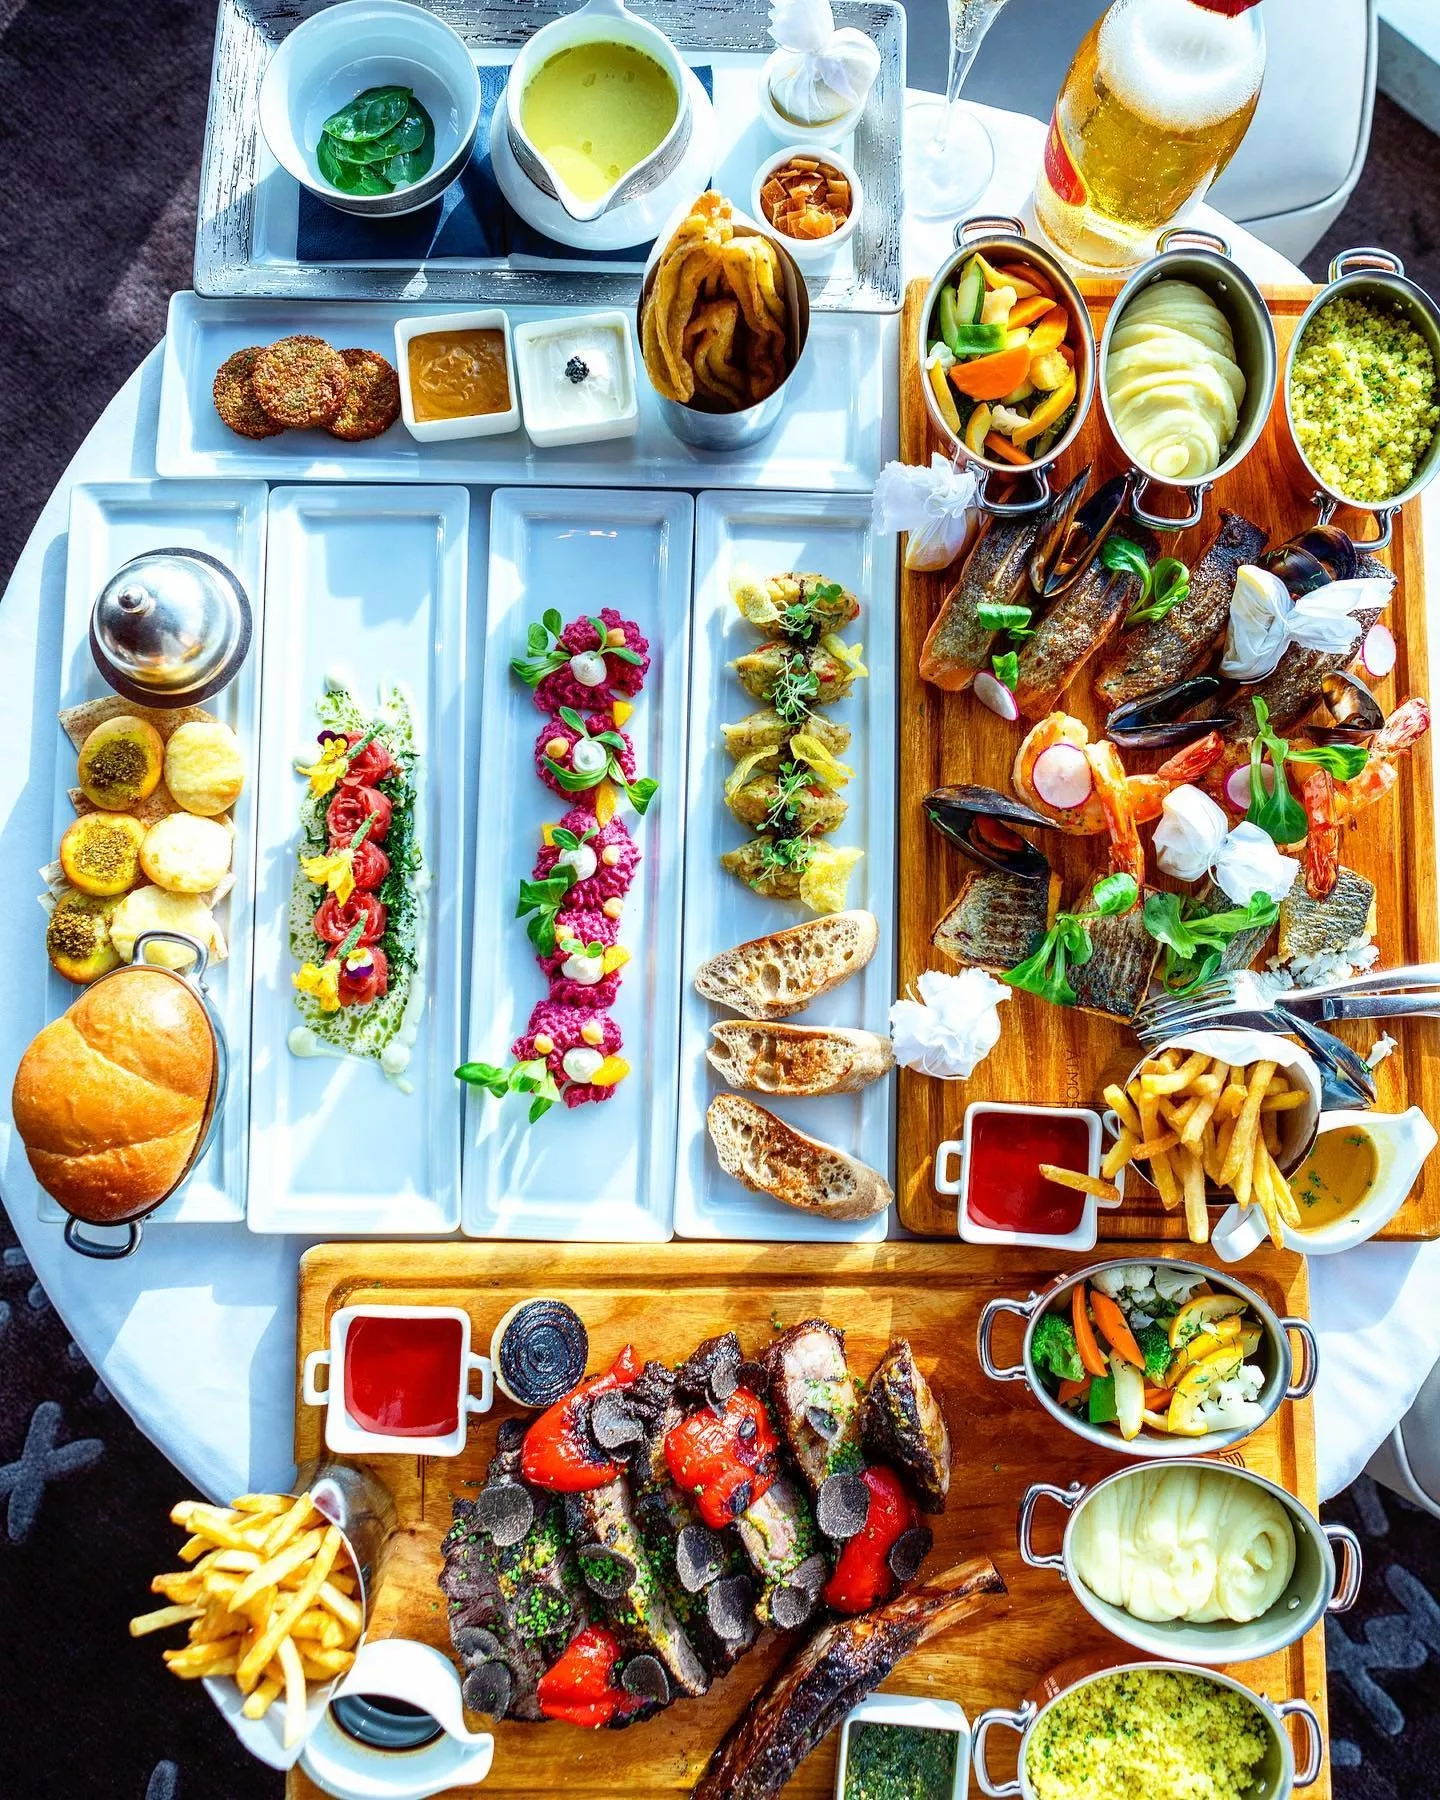 هذه هي افضل 10 مطاعم في الامارات تقدّم وجبات سحور وافطار رمضان 2022... زوريها مع عائلتكِ!